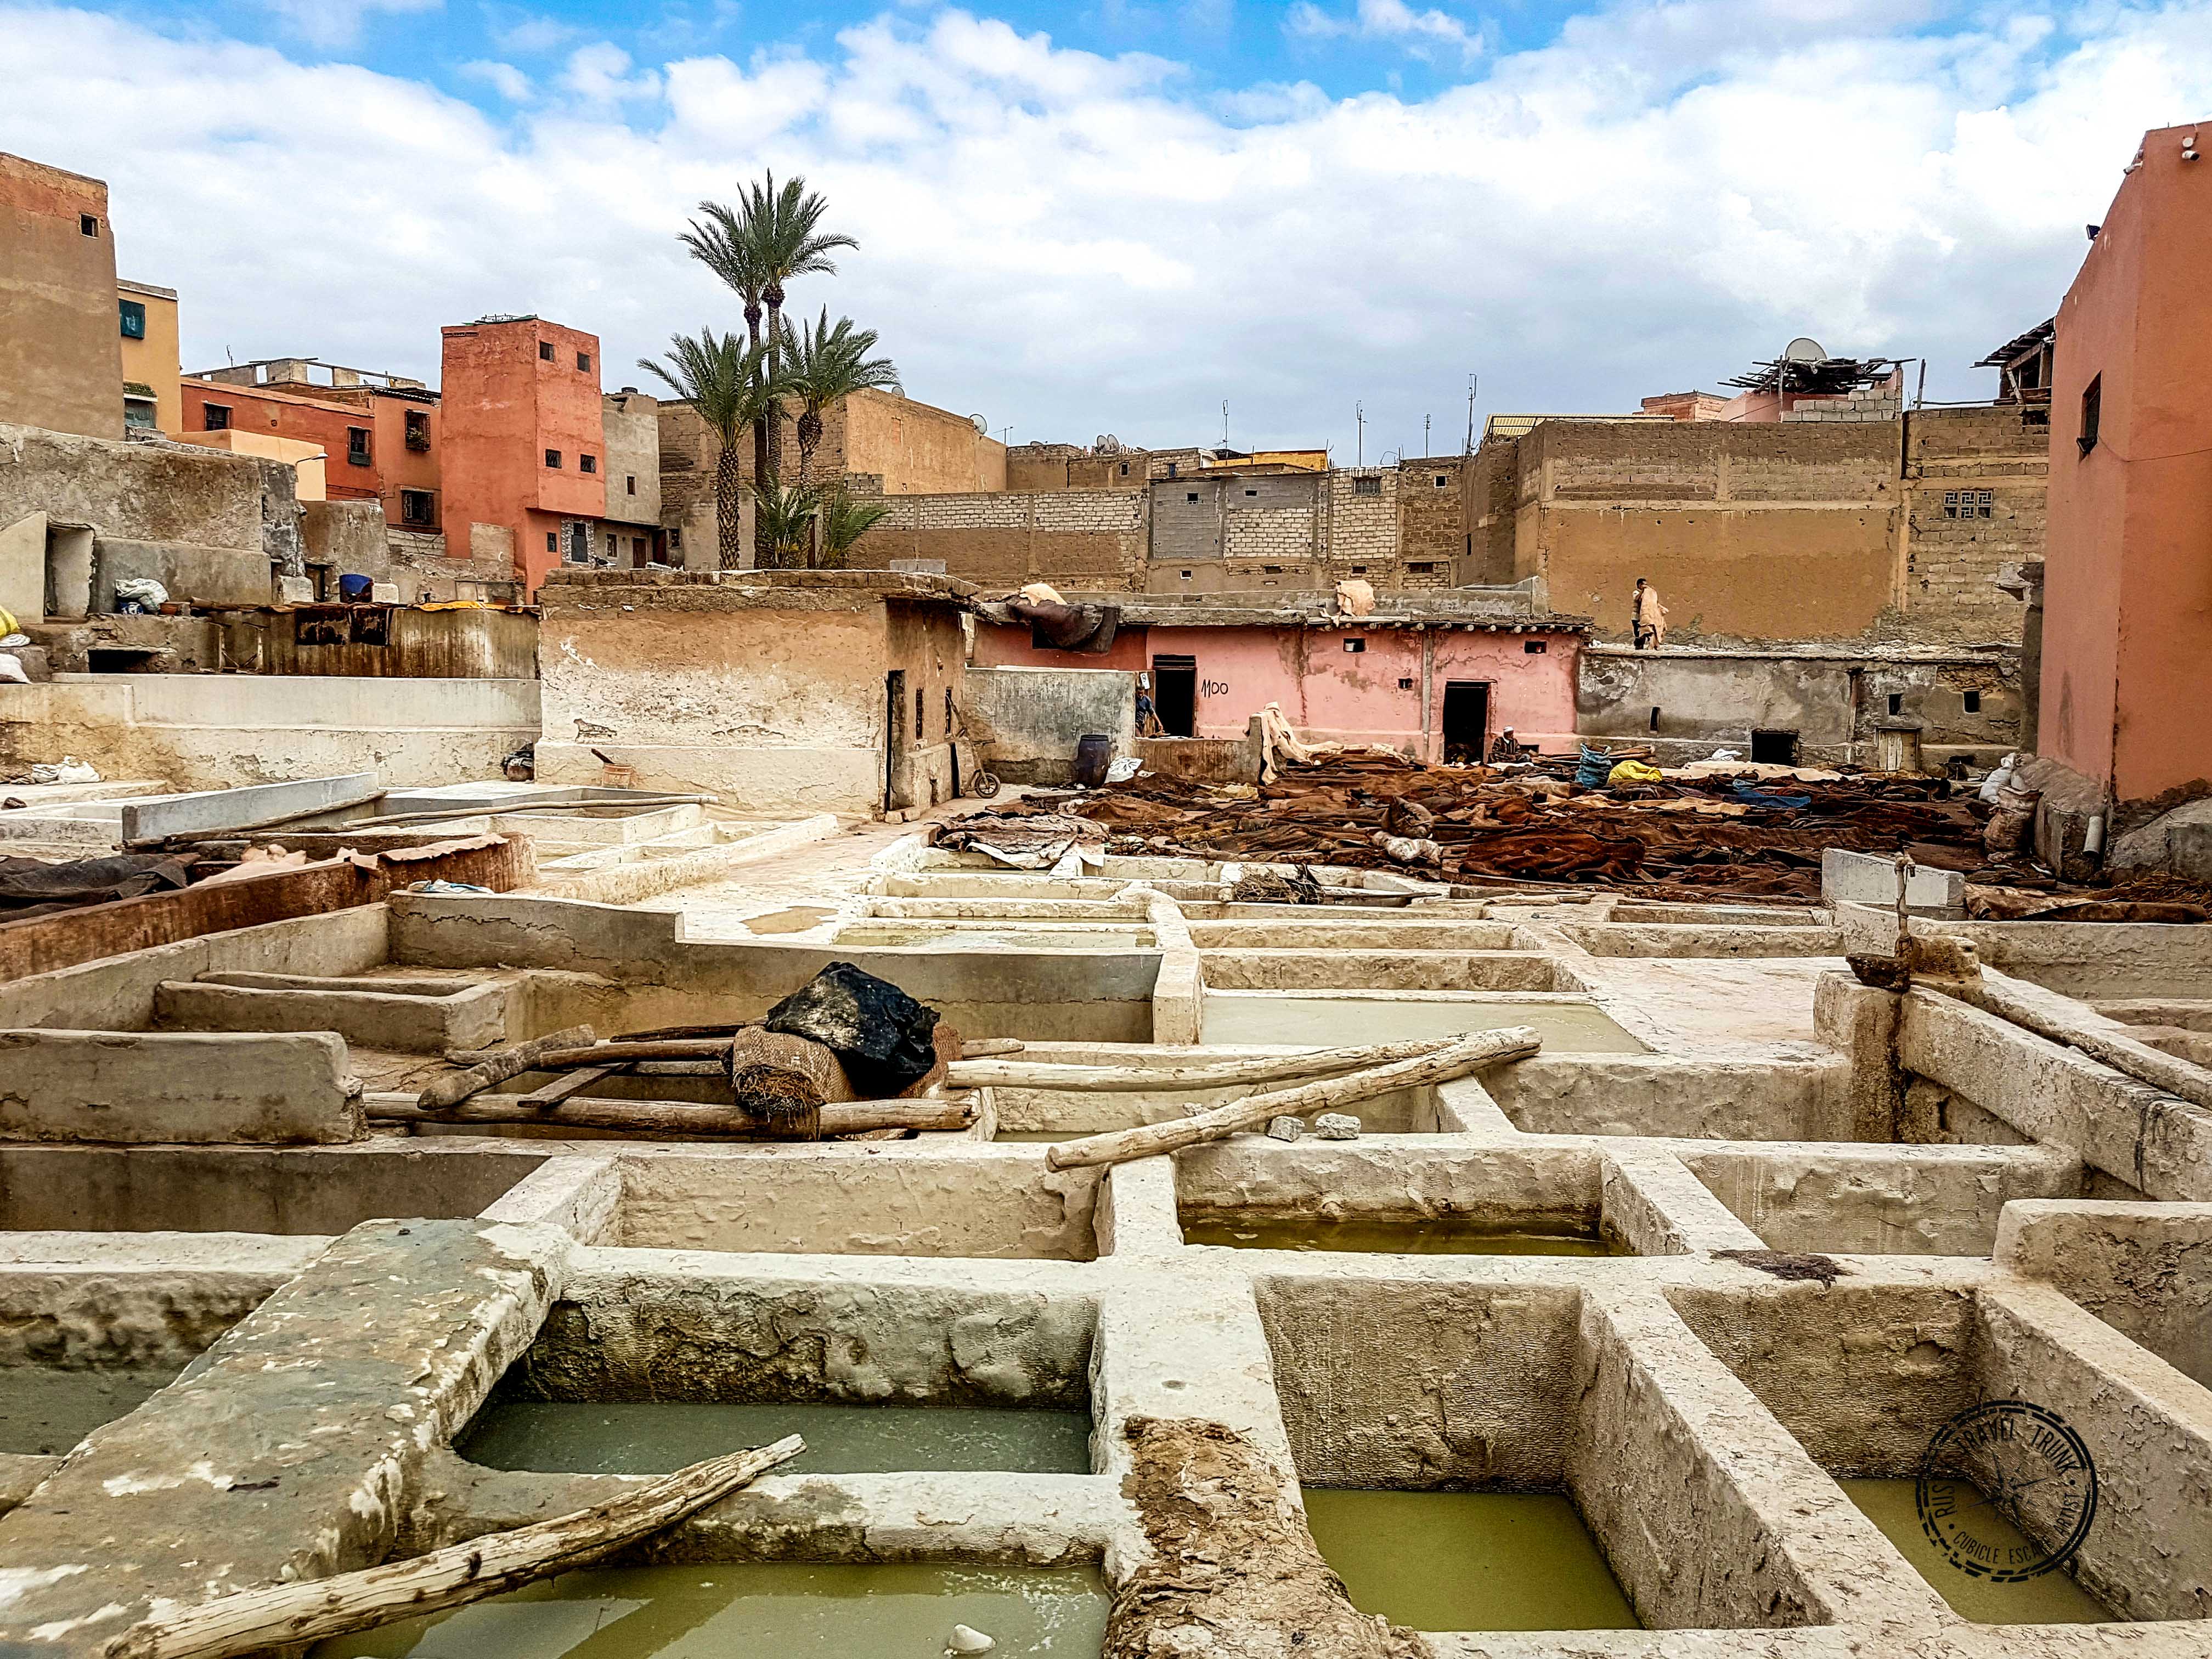 The Skala and Ramparts of Essaouira, Morocco - Rusty 